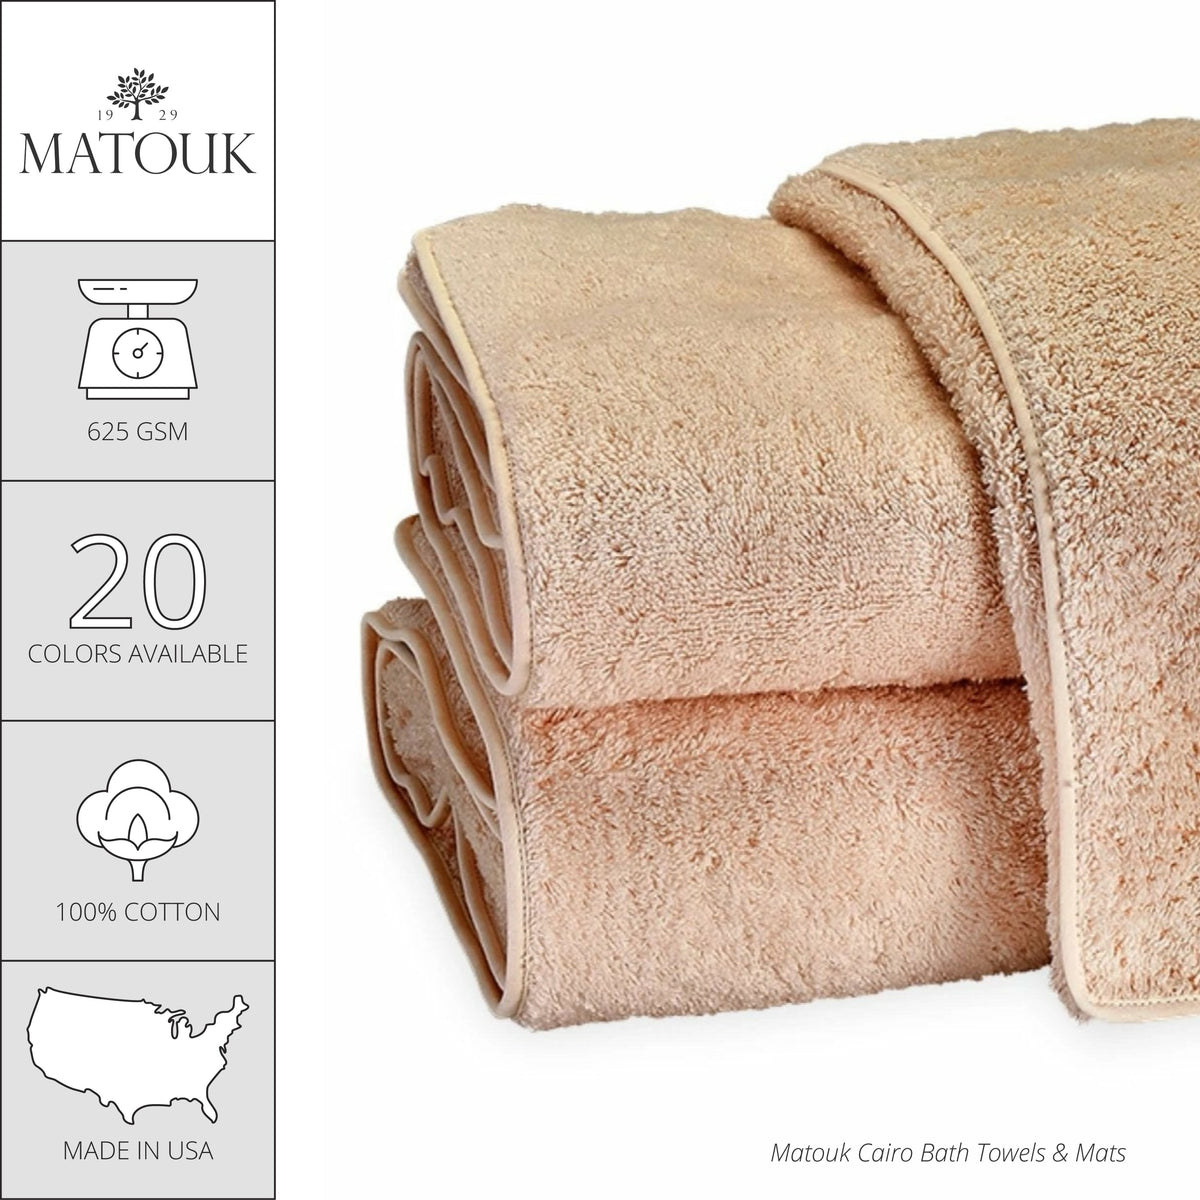 Matouk Cairo Scallop Bath Towels and Mats - White